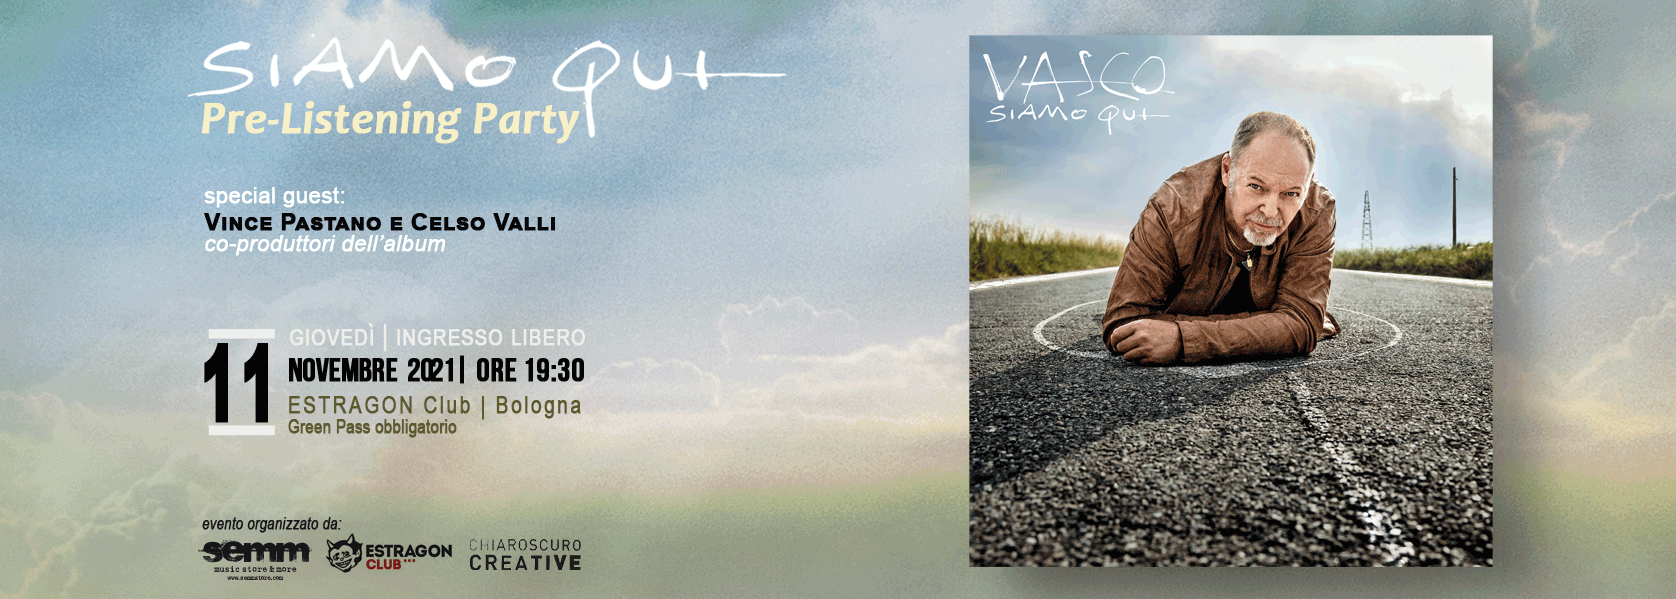 " Siamo Qui" Pre-listening party nuovo album Vasco Rossi